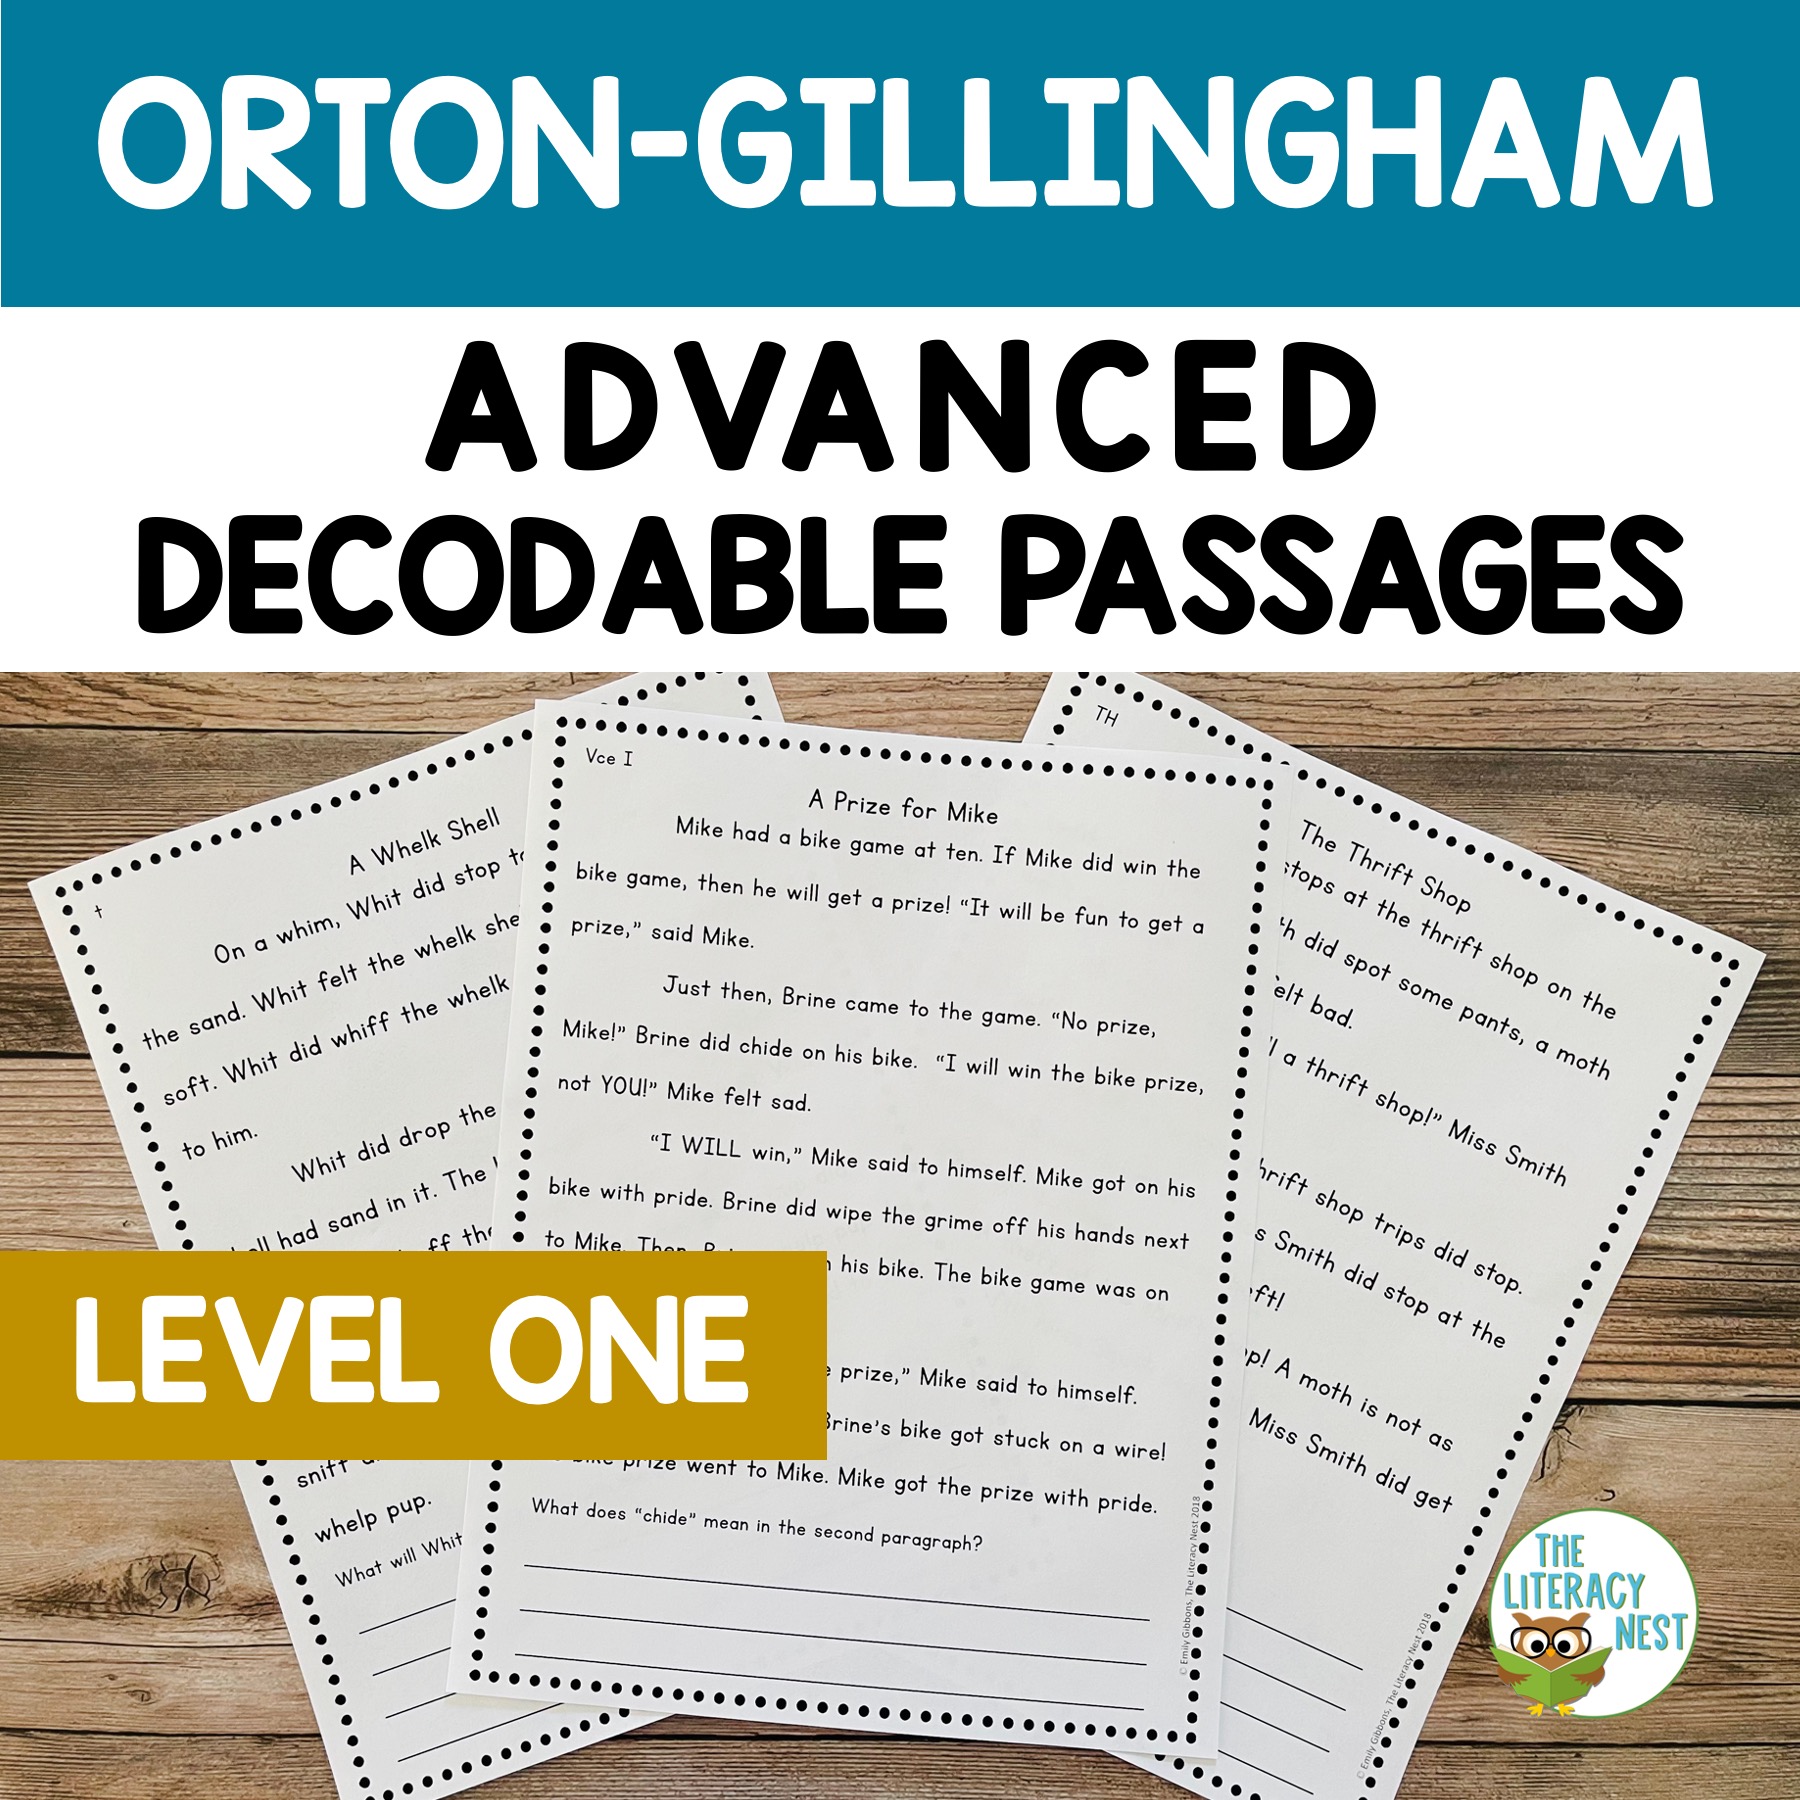 Representación tranquilo intimidad Advanced Orton-Gillingham Decodable Passages Lessons Level 1 - The Literacy  Nest